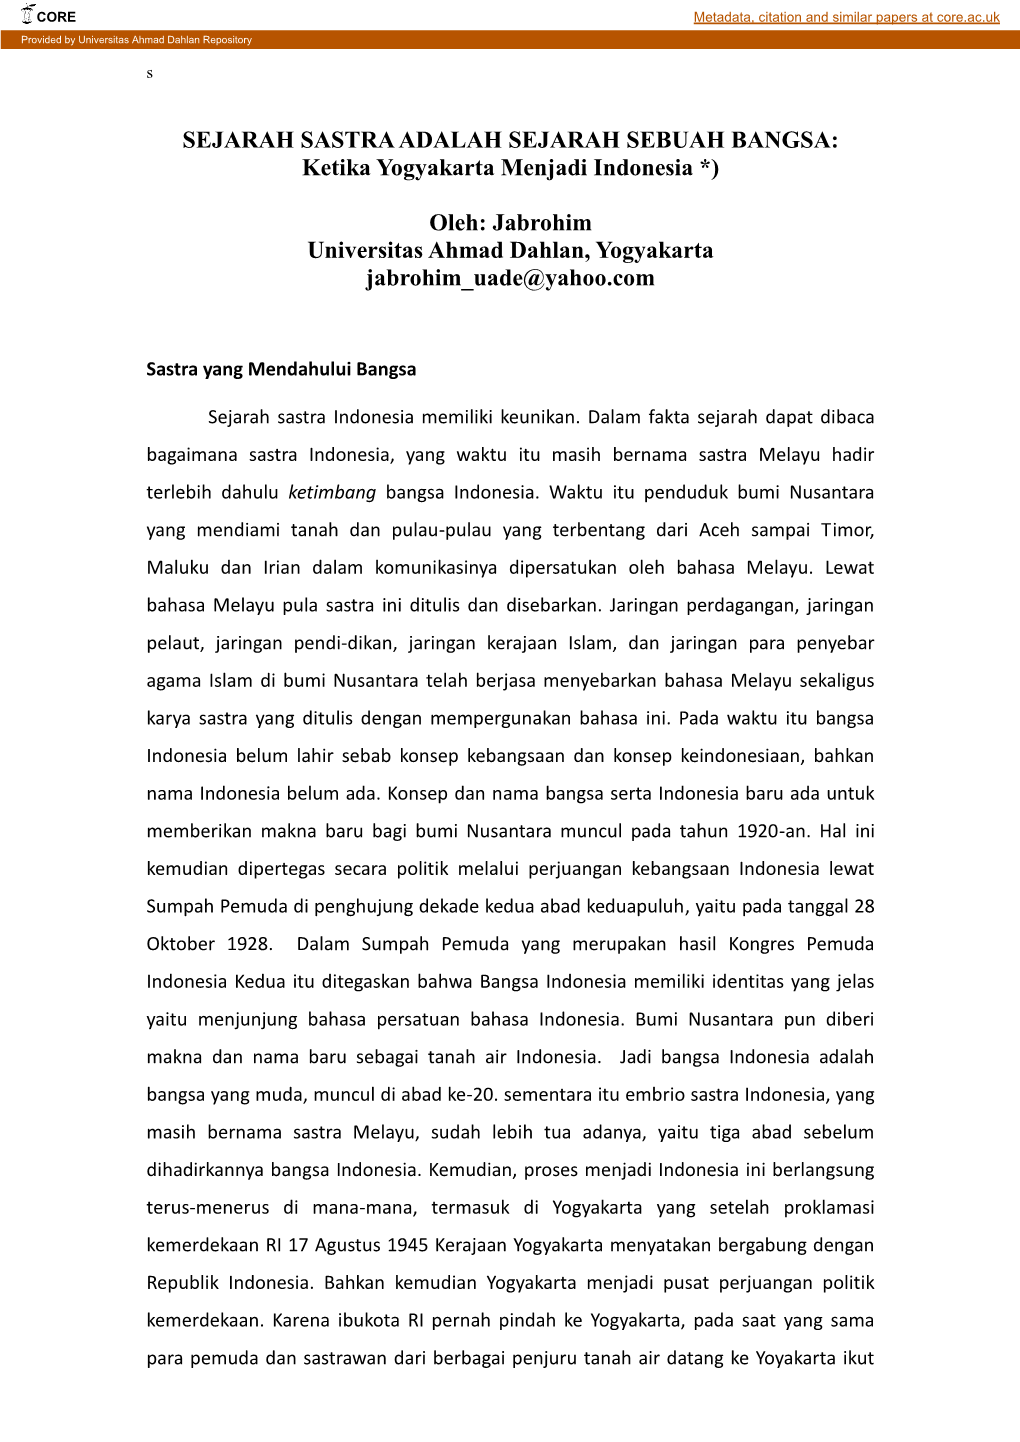 SEJARAH SASTRA ADALAH SEJARAH SEBUAH BANGSA: Ketika Yogyakarta Menjadi Indonesia *)